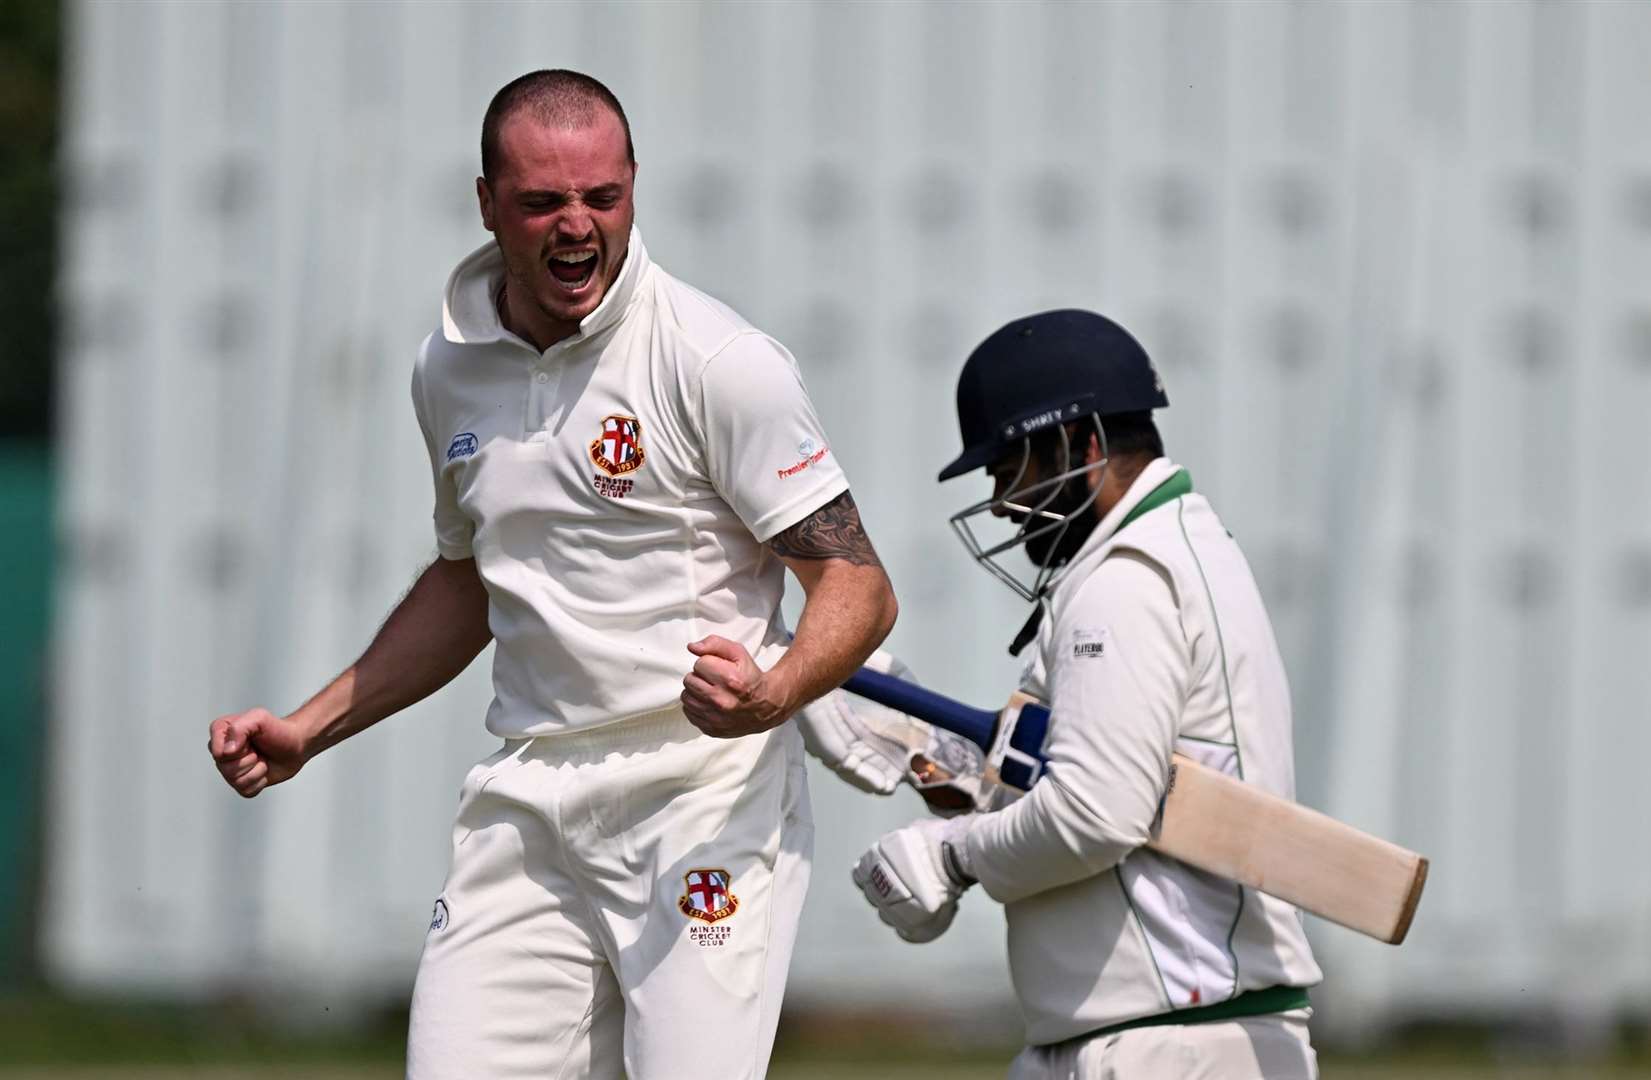 James Speer celebrates the wicket of Blackheath opener Jas Bassan Picture: Keith Gillard